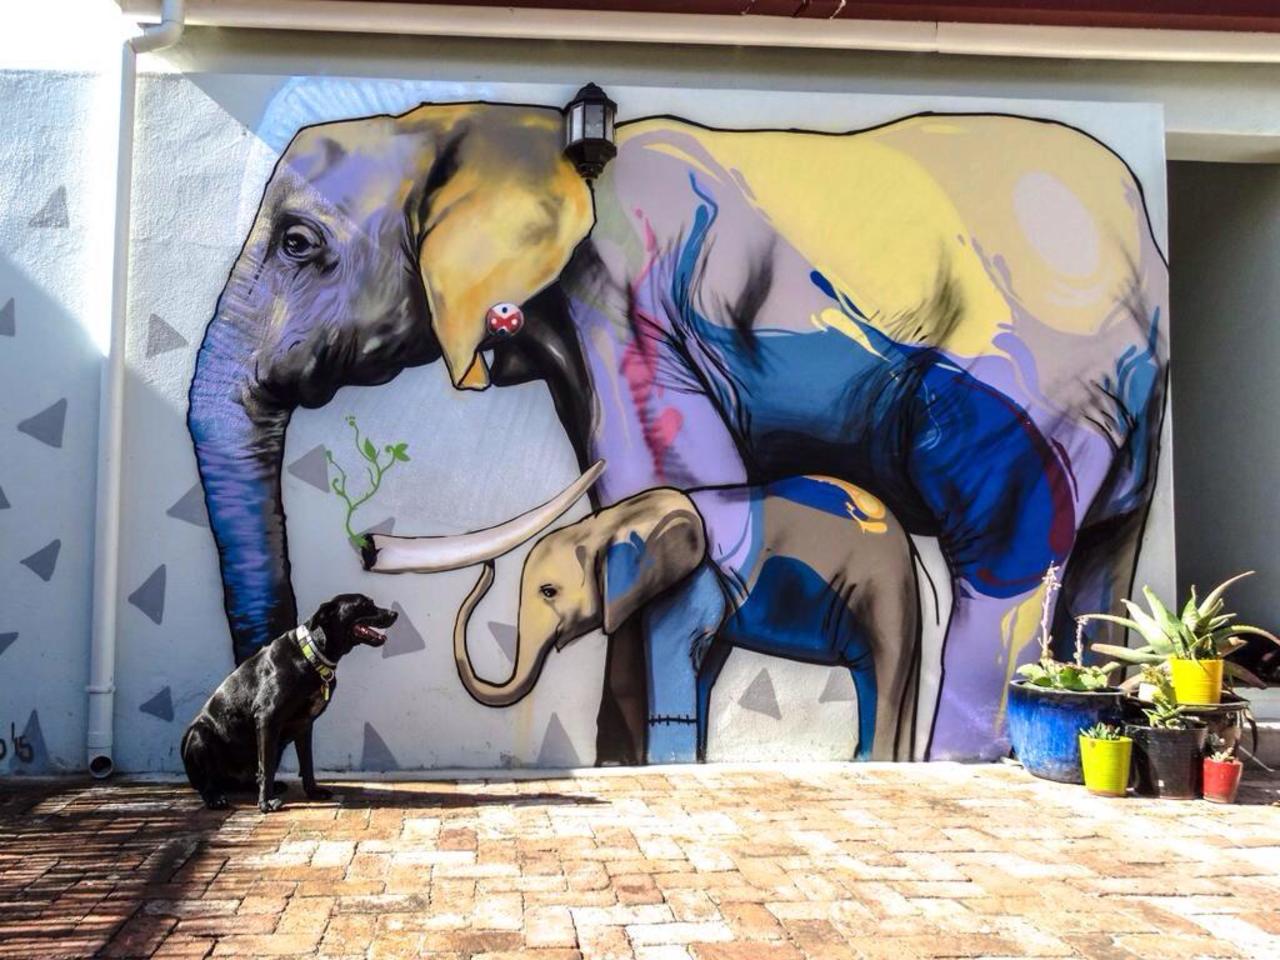 Latest nature in Street Art piece by Falko Paints In Cape Town

#art #mural #graffiti #streetart http://t.co/dirGcbEQlh